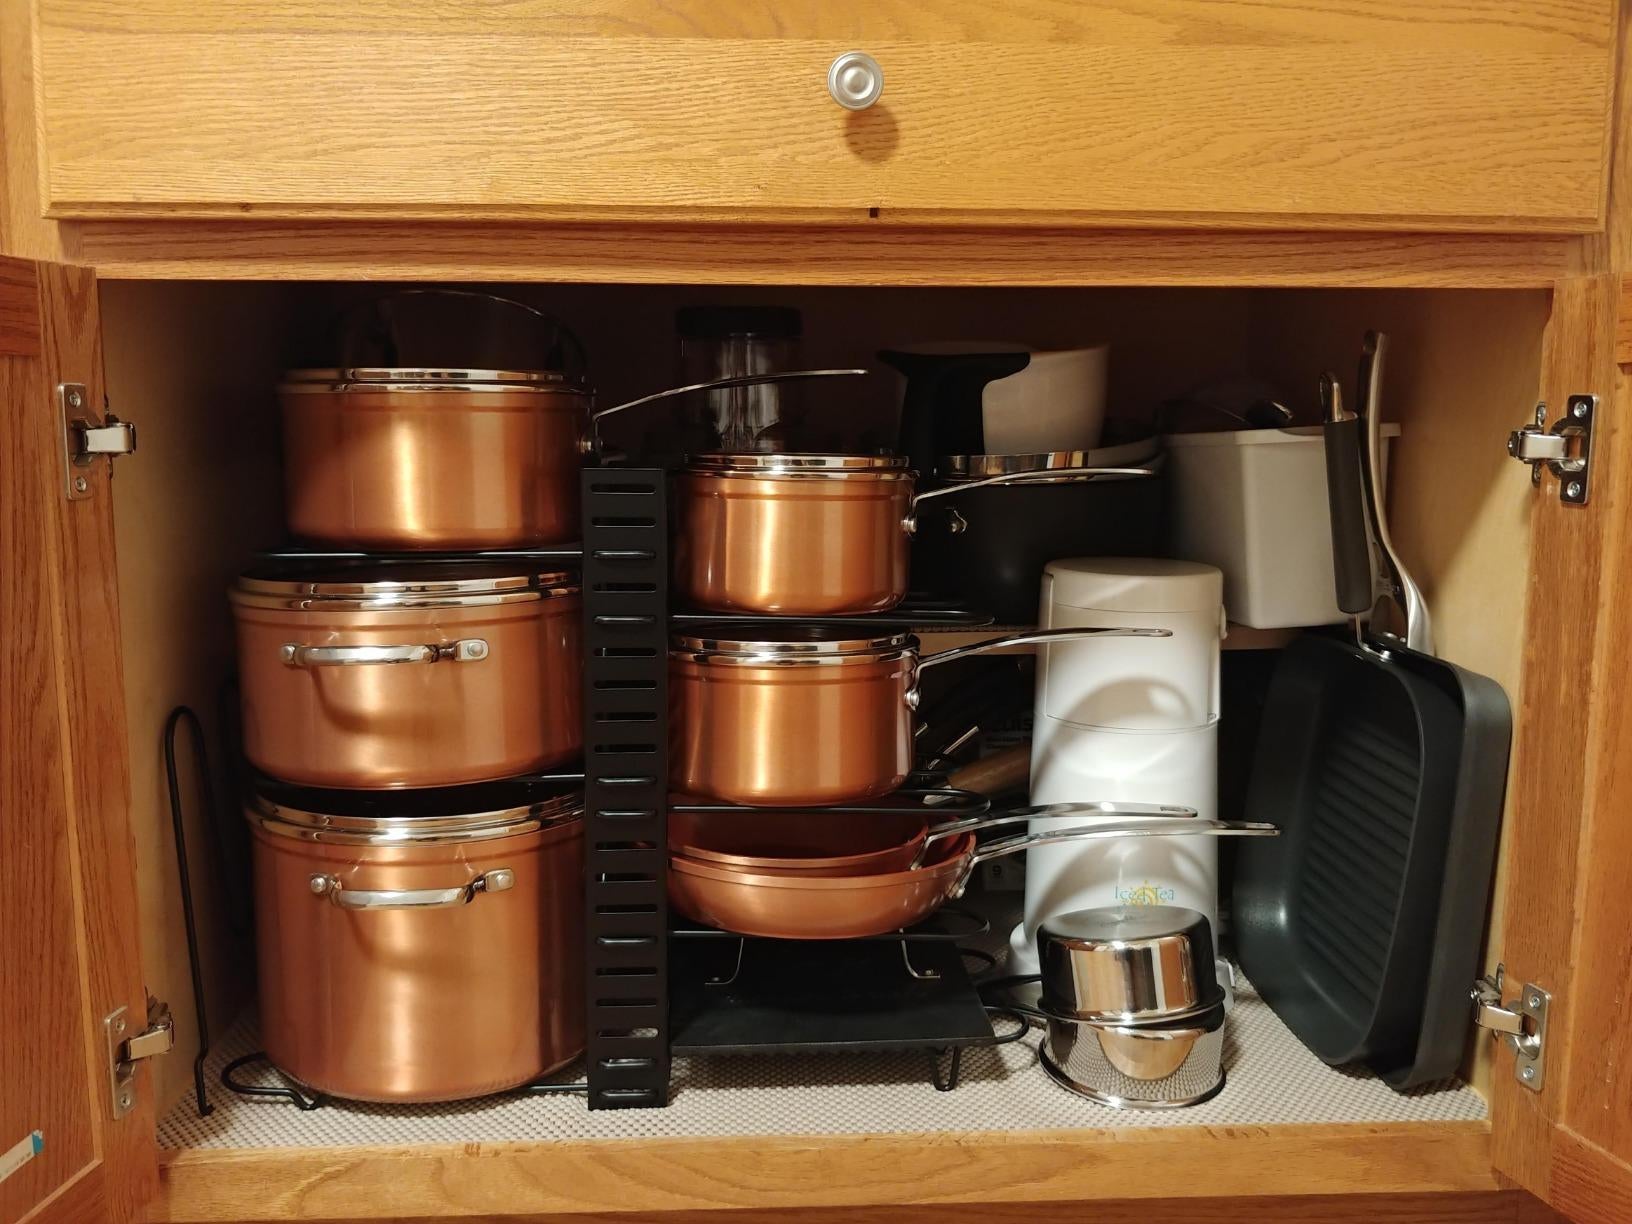 Super Sink Base Cabinet - Organizing Your Kitchen Sink